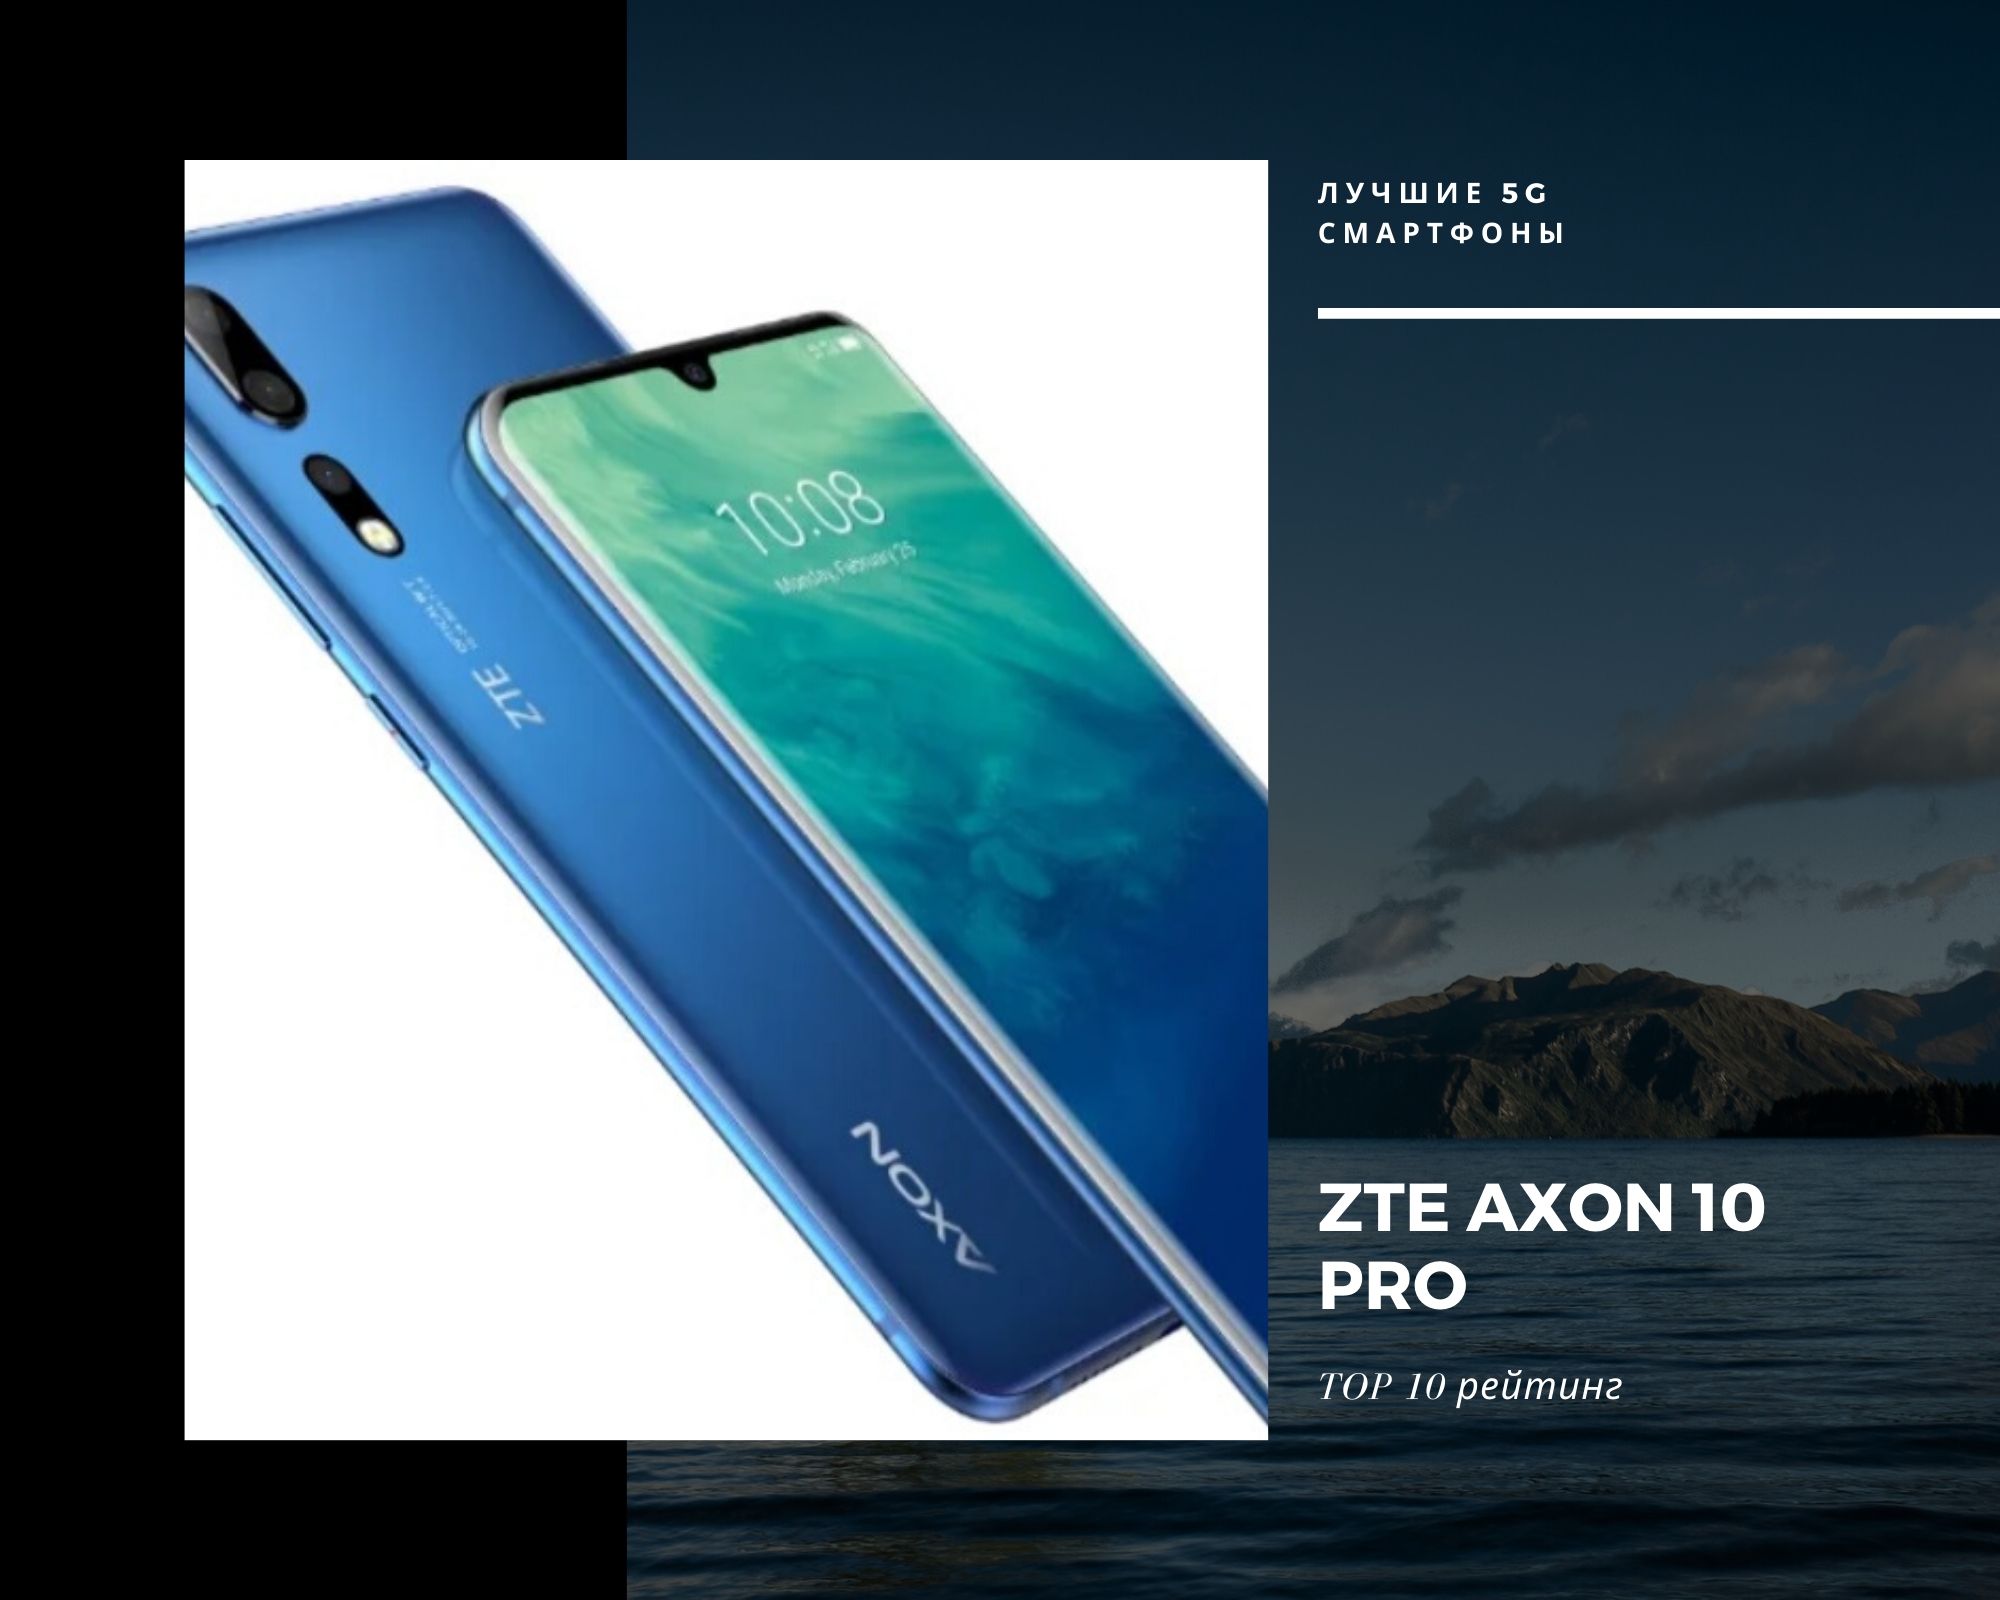 Обзор и тест смартфона zte axon 9 pro — первые впечатления от съёмки